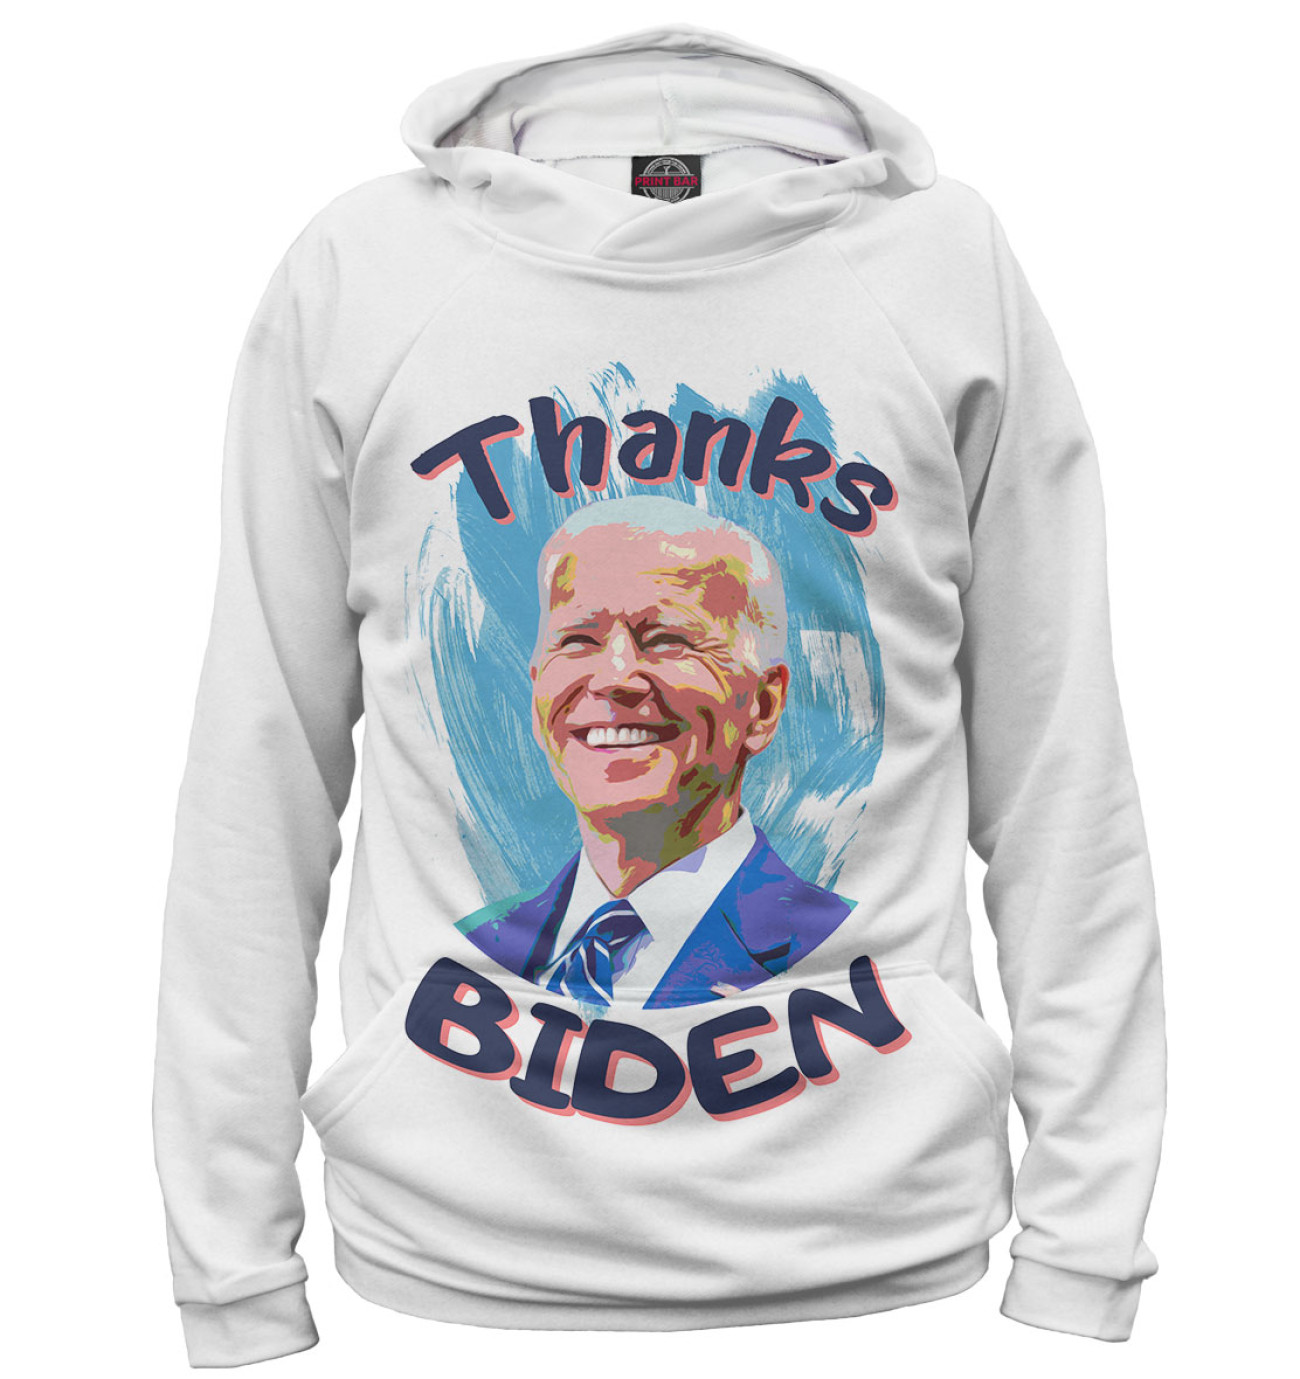 Мужское Худи Thanks Biden, артикул: OTD-207158-hud-2